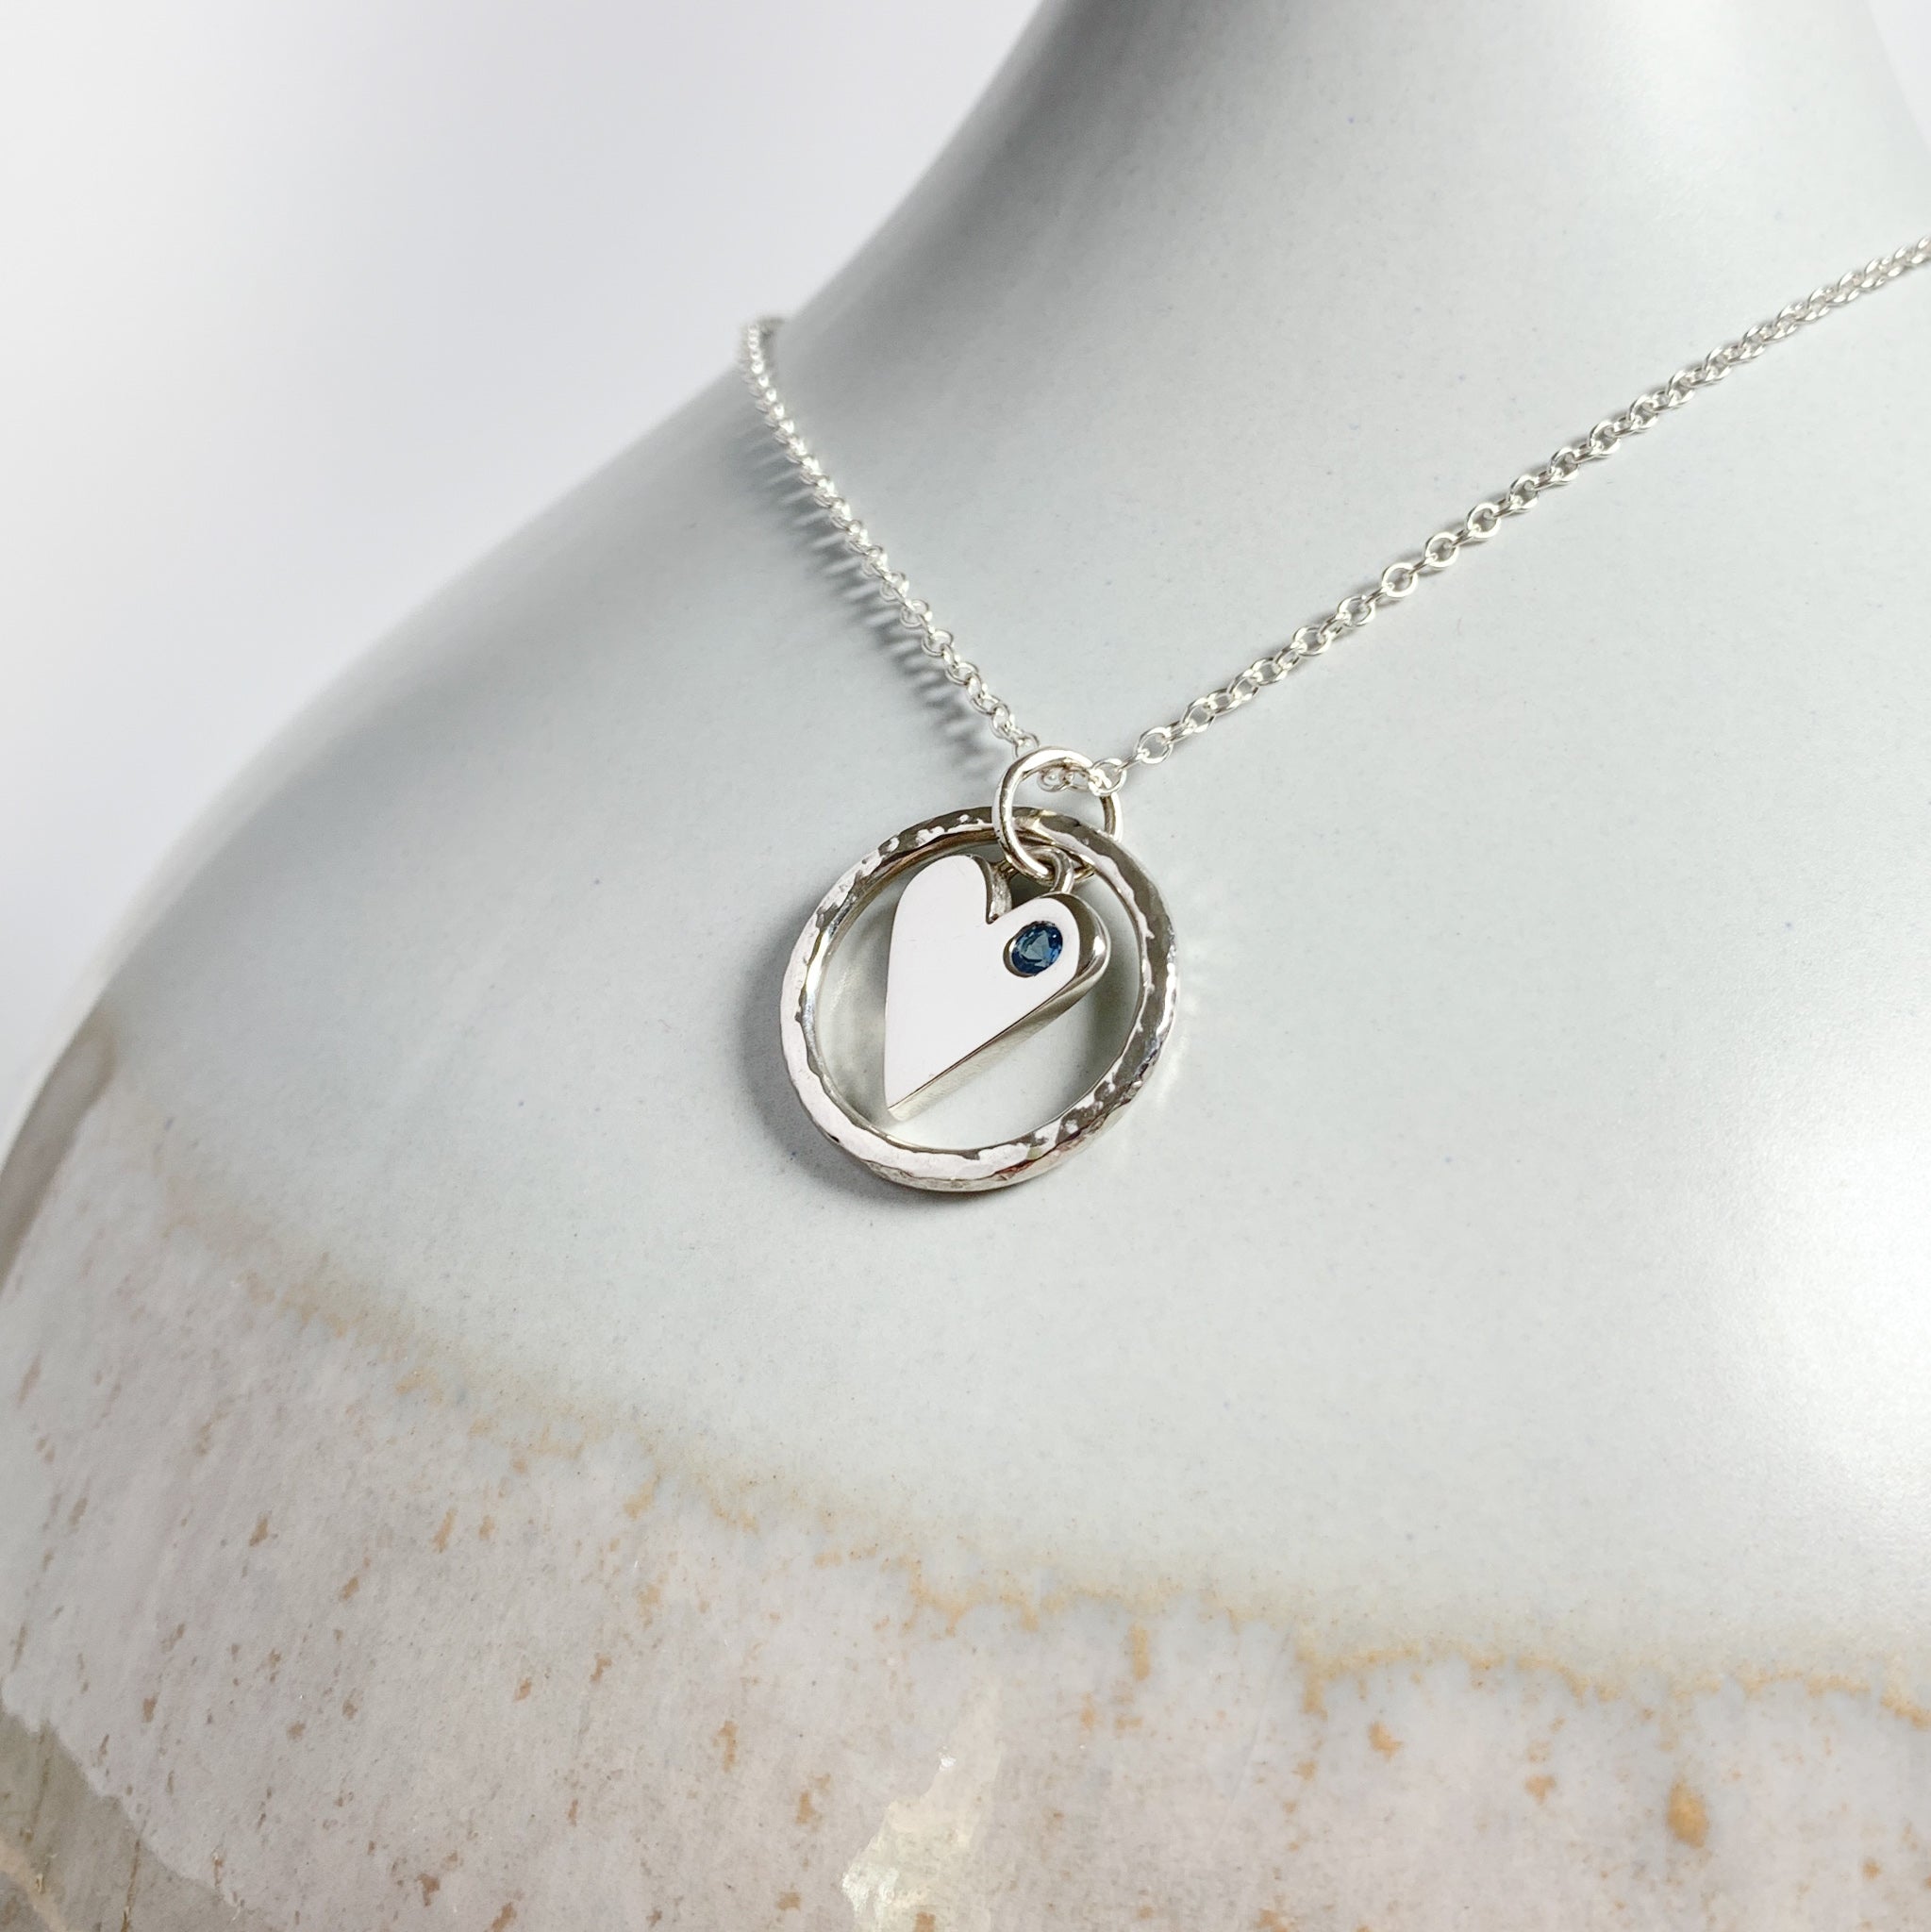 Caldera Amor Blue Sapphire Heart Pendant Necklace